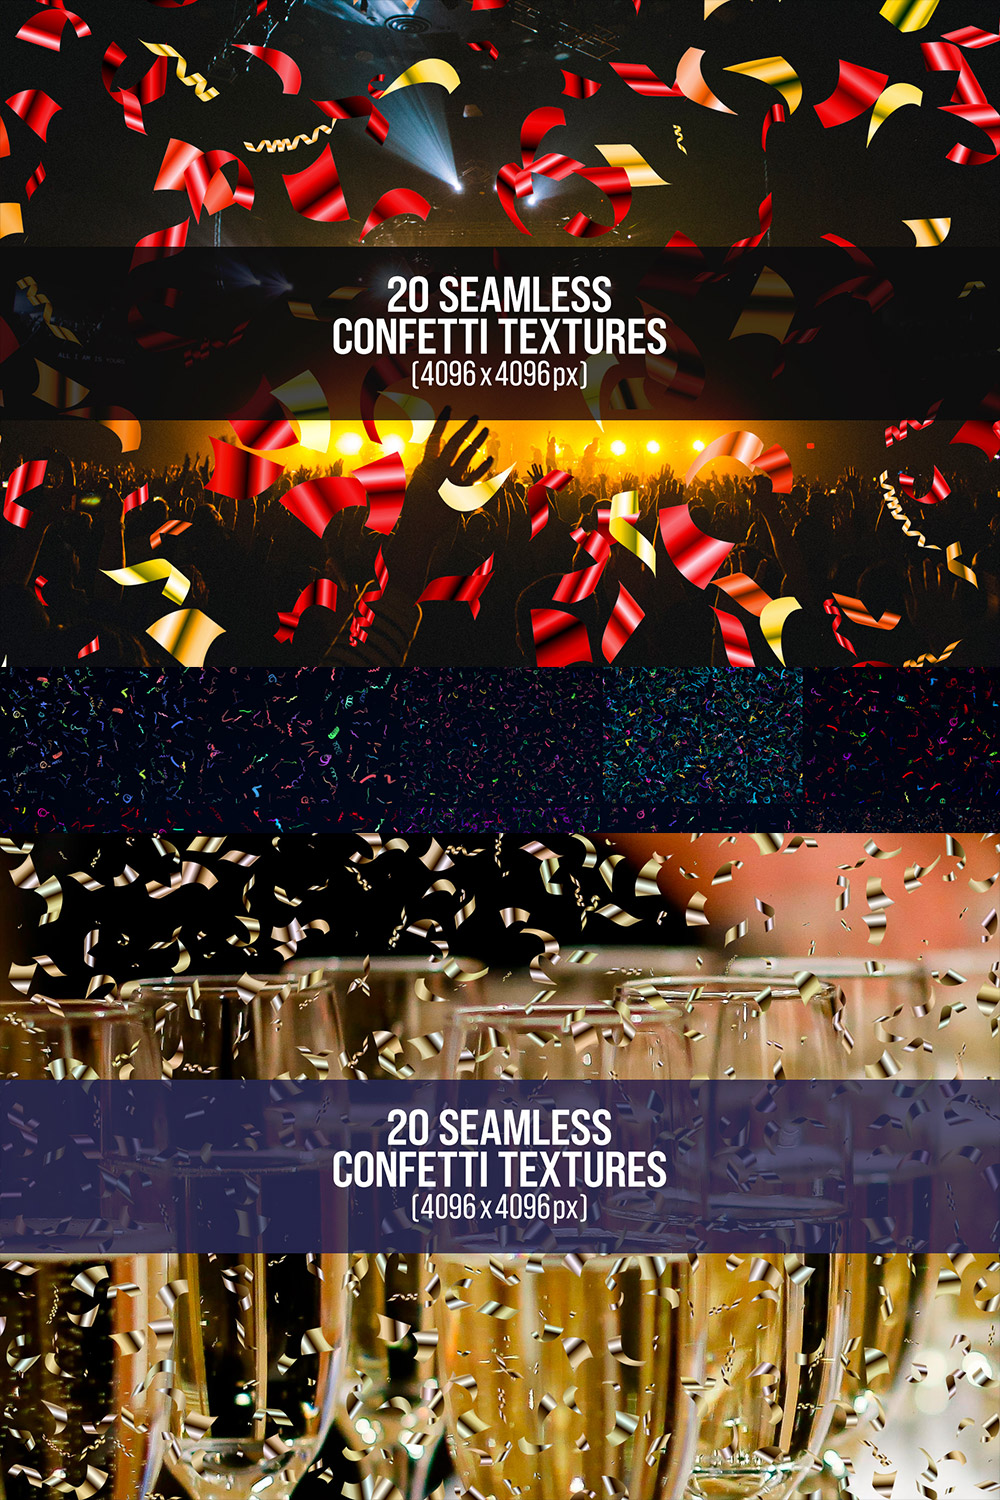 Seamless Confetti Textures Design pinterest image.